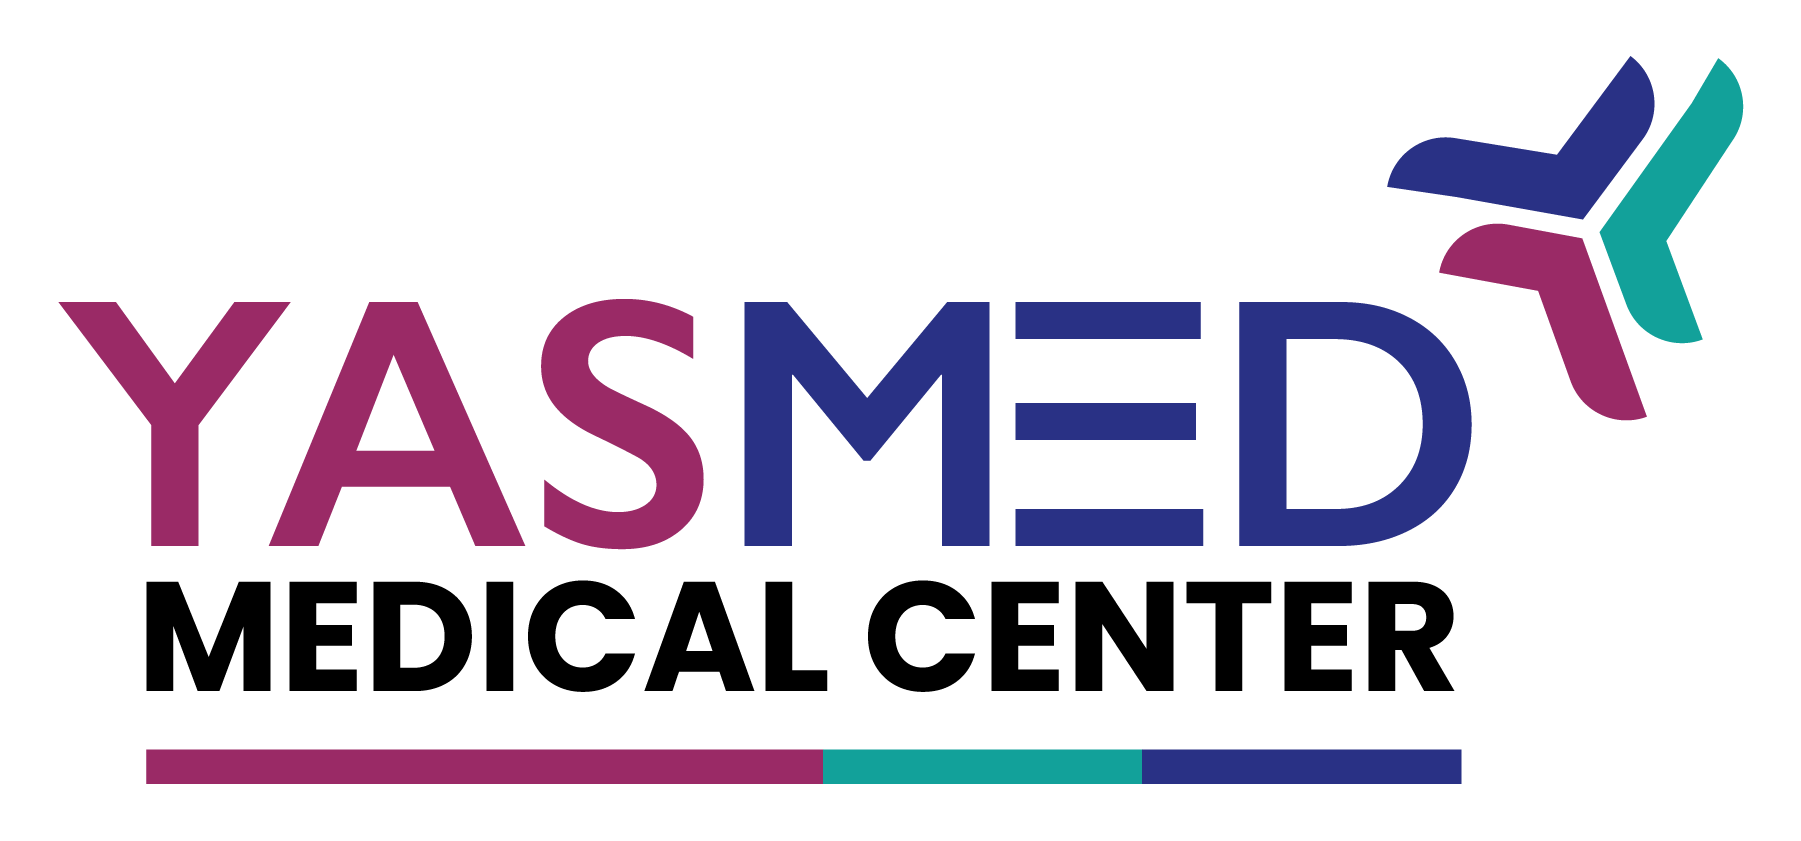 YASMED Medical Center